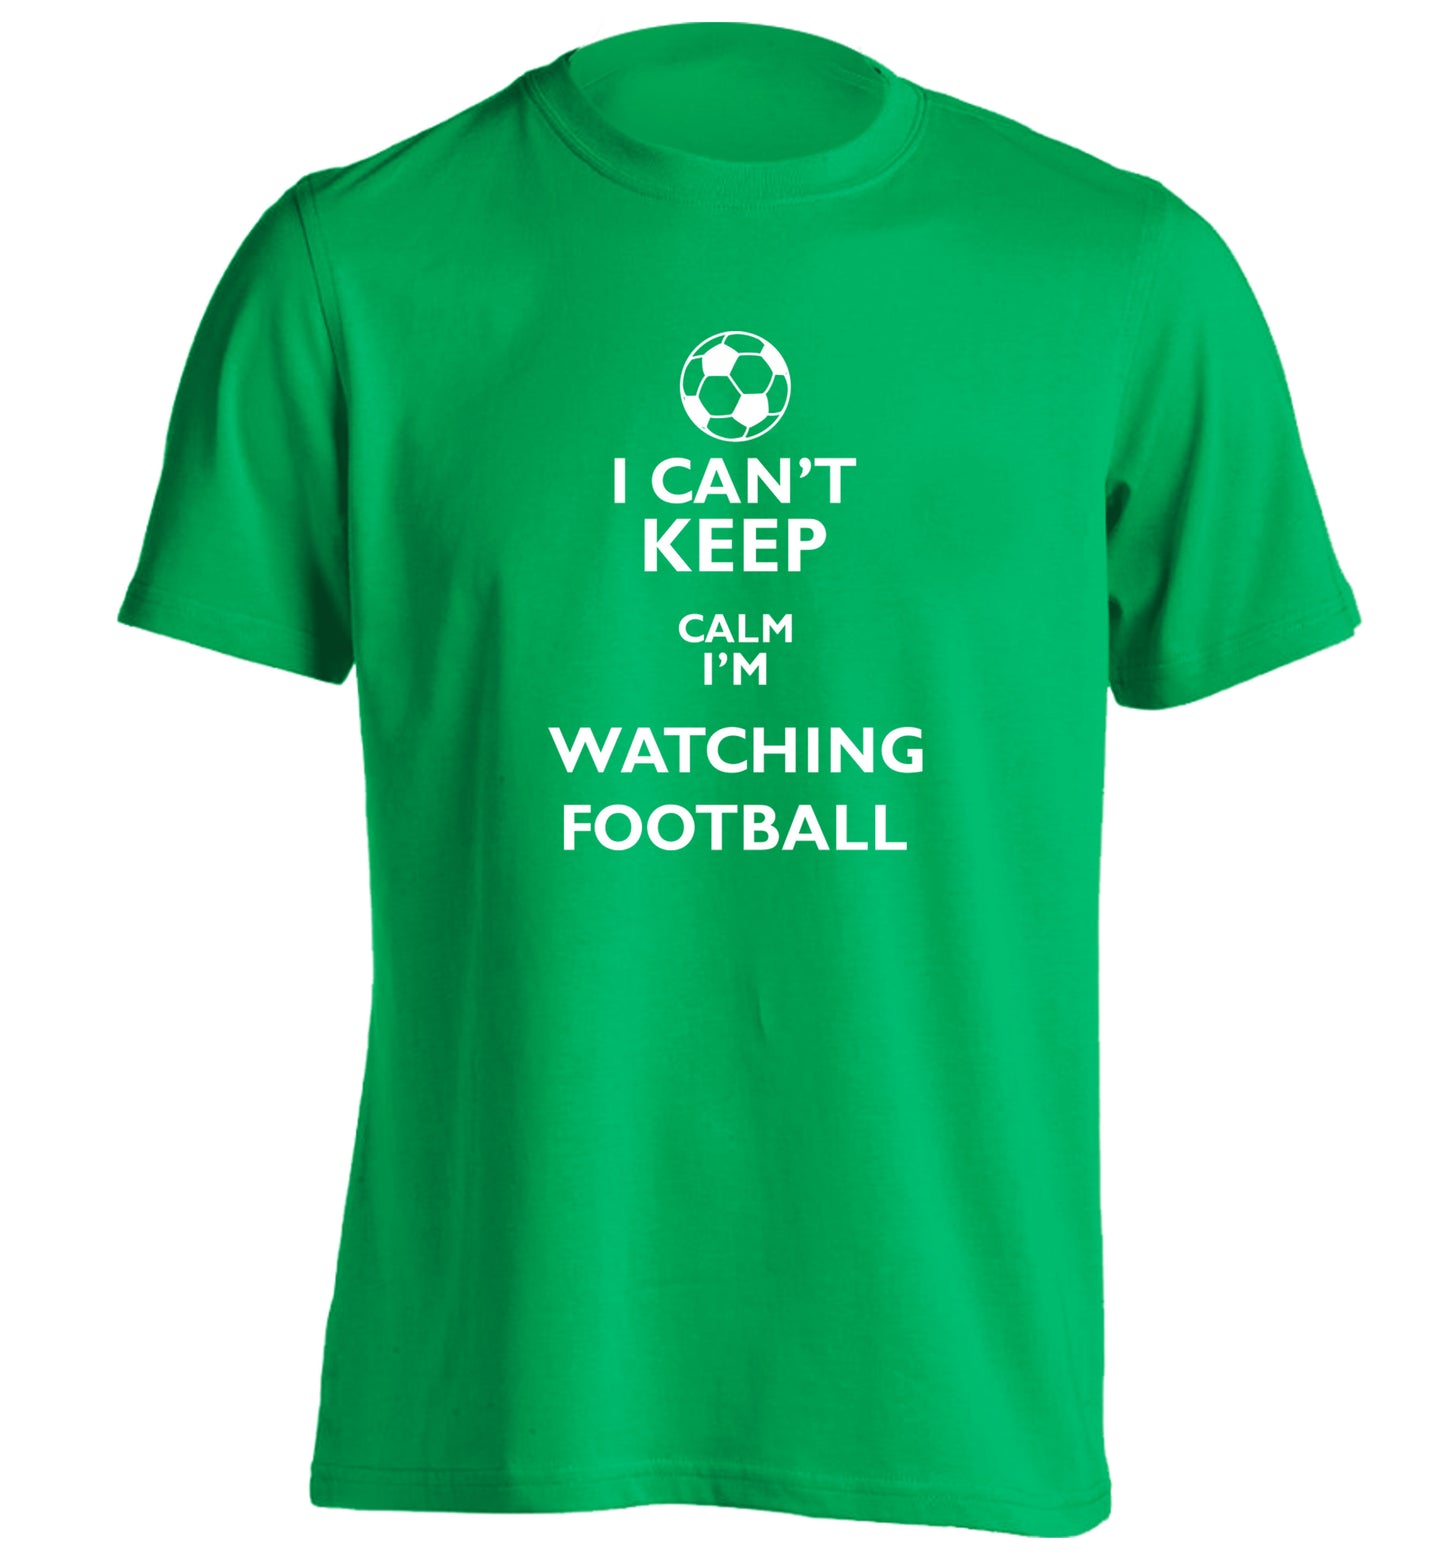 I can't keep calm I'm watching the football adults unisexgreen Tshirt 2XL